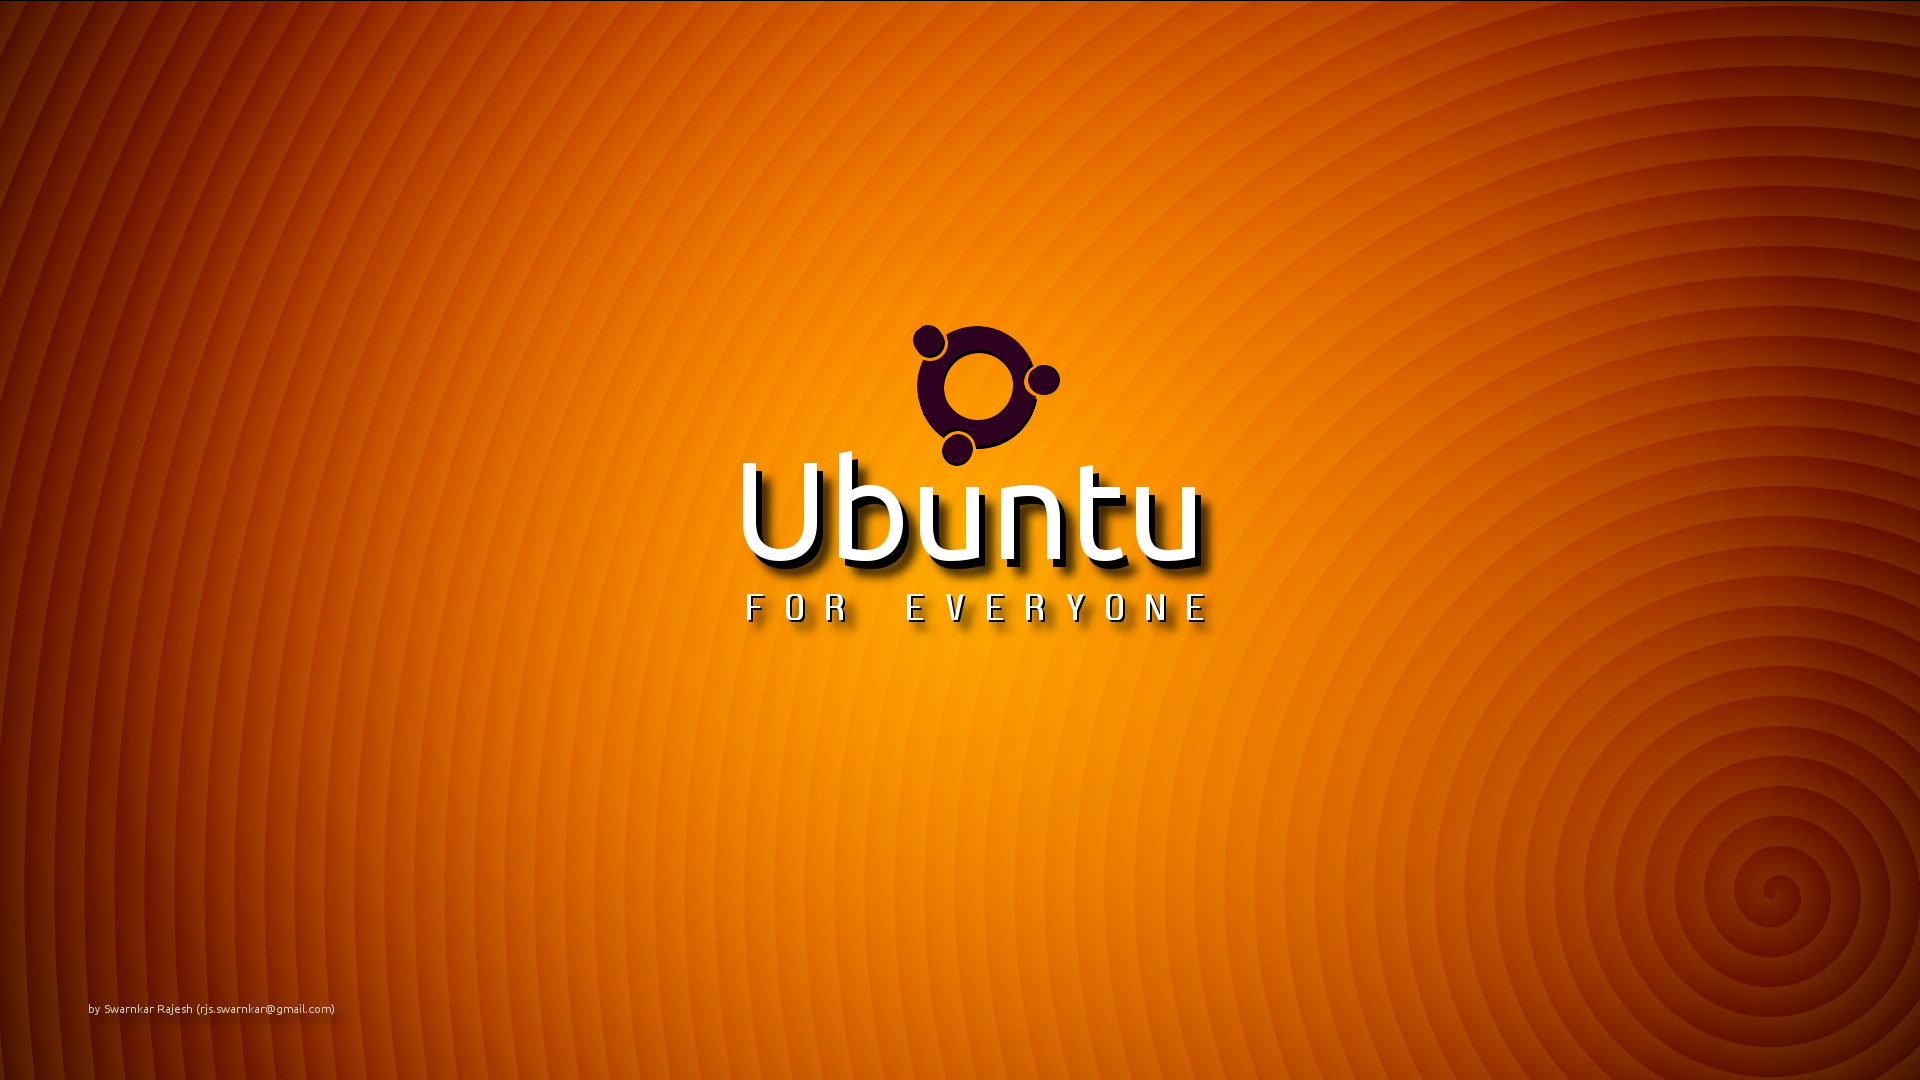 Ubuntu Hd wallpaper   1421824 1920x1080